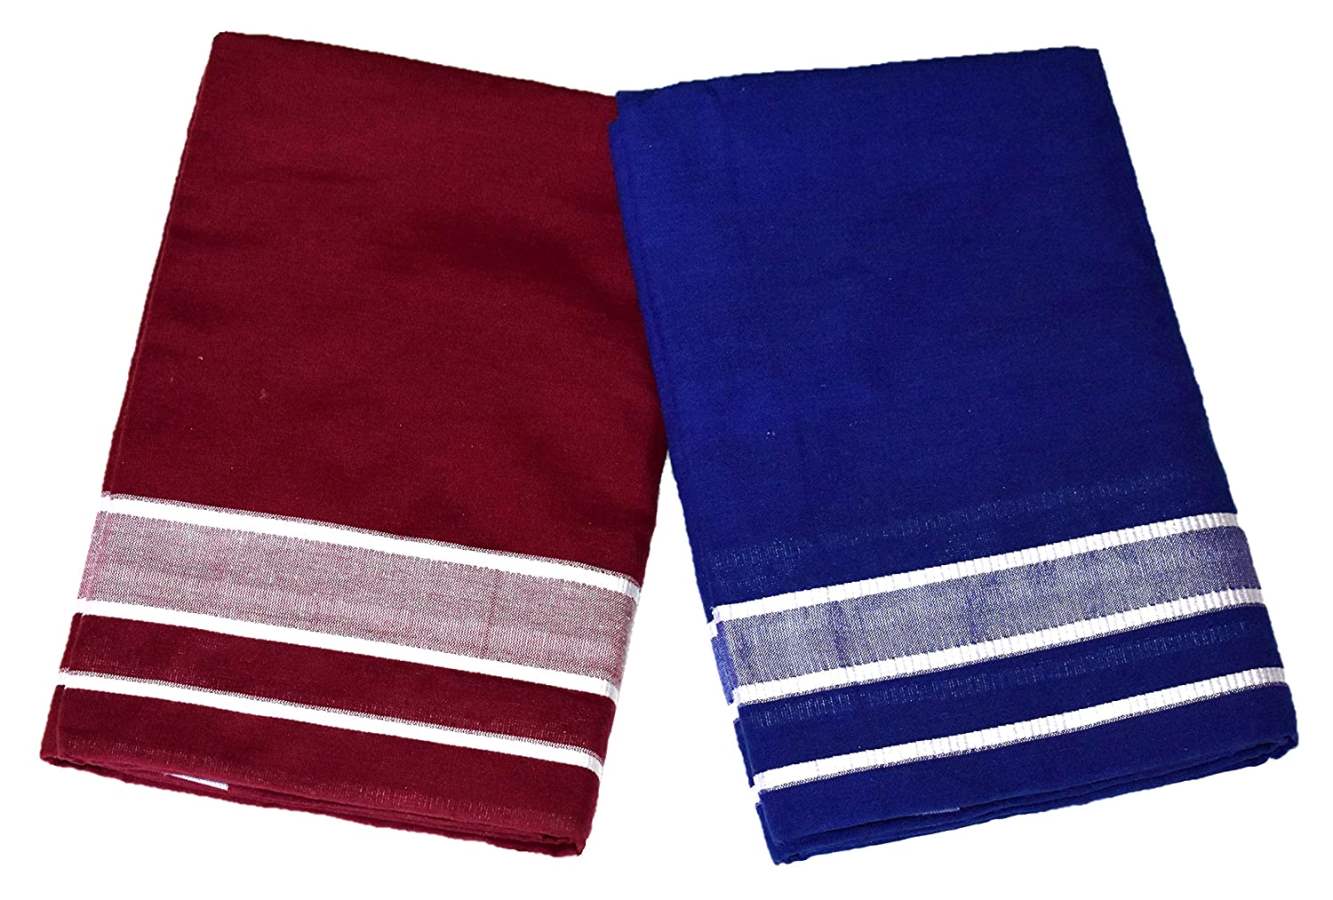 Trinity Fashions IXORA Kerala Premam Colour Dhotis Cotton(Blue and Maroon) - 1 No